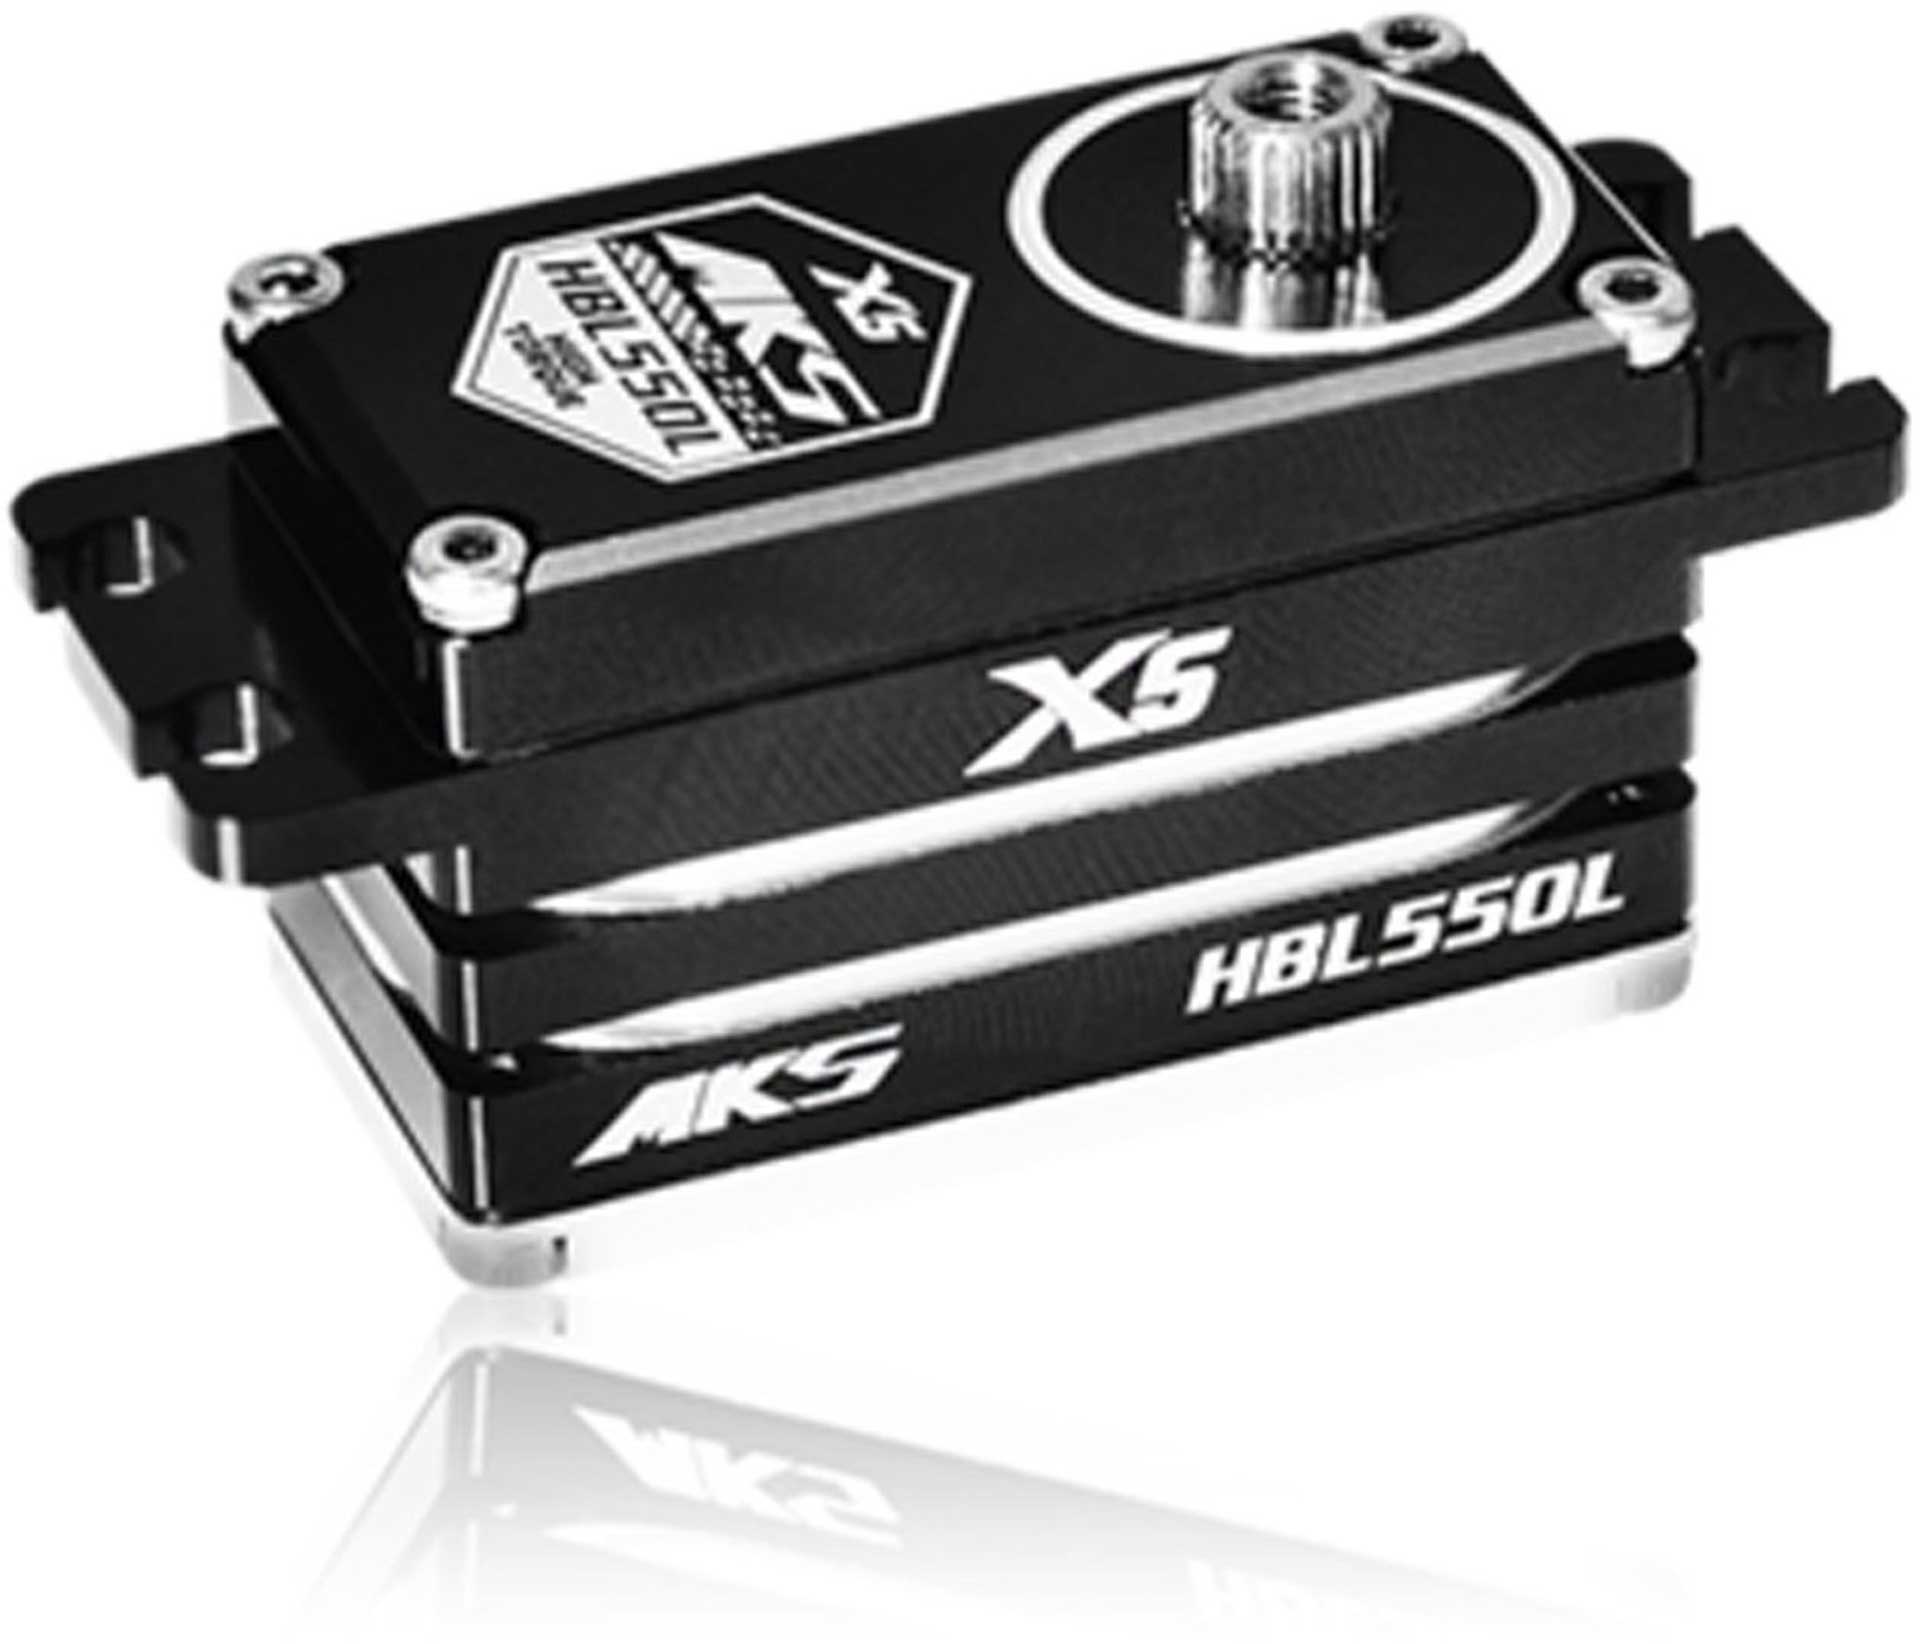 MKS HBL550L HV Digital Servo brushless X5 Serie